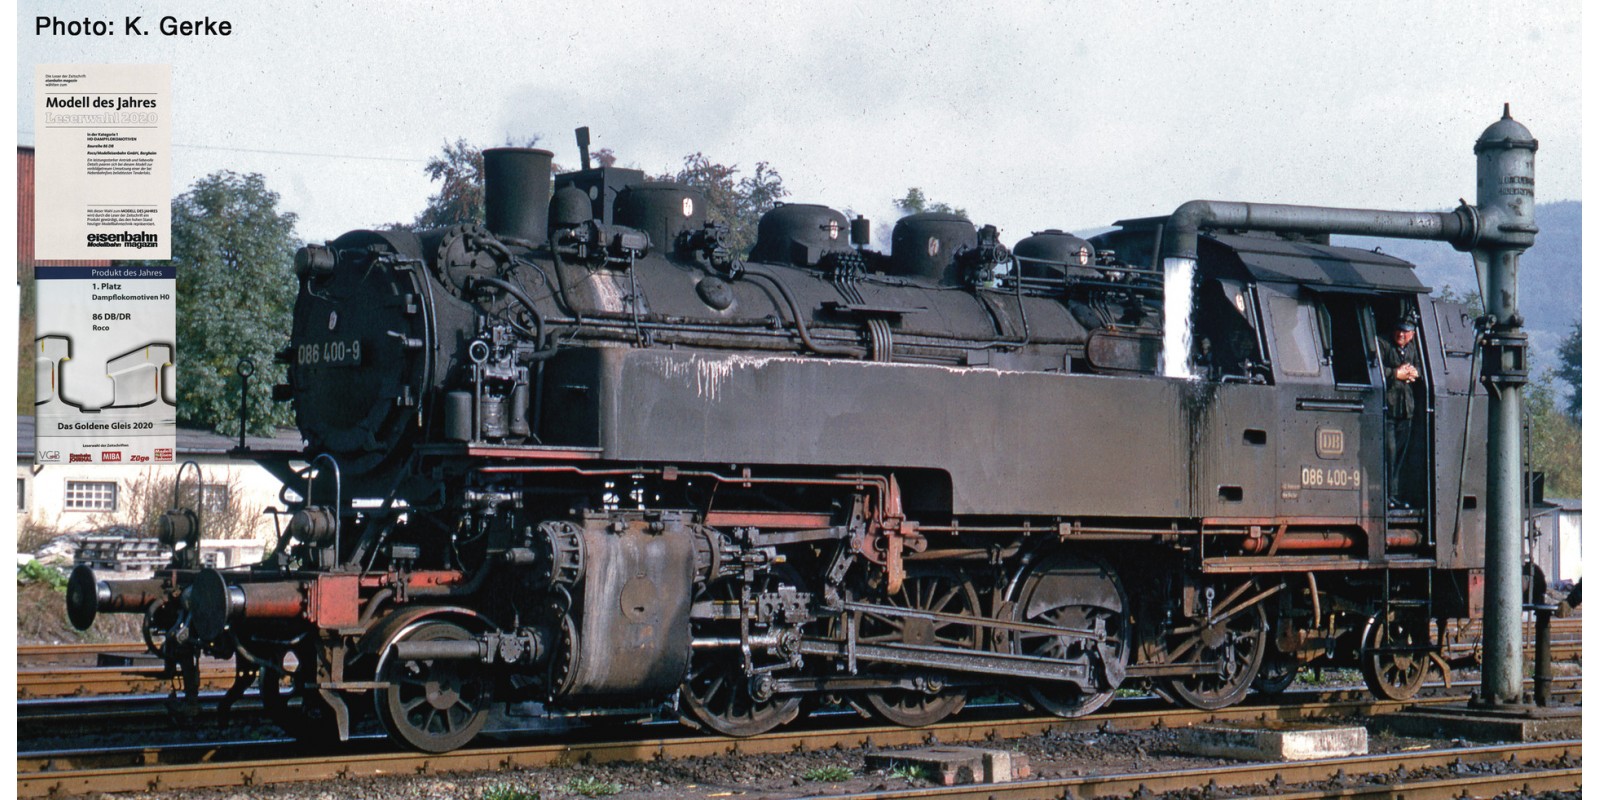 RO70318 Steam locomotive 086 400-9